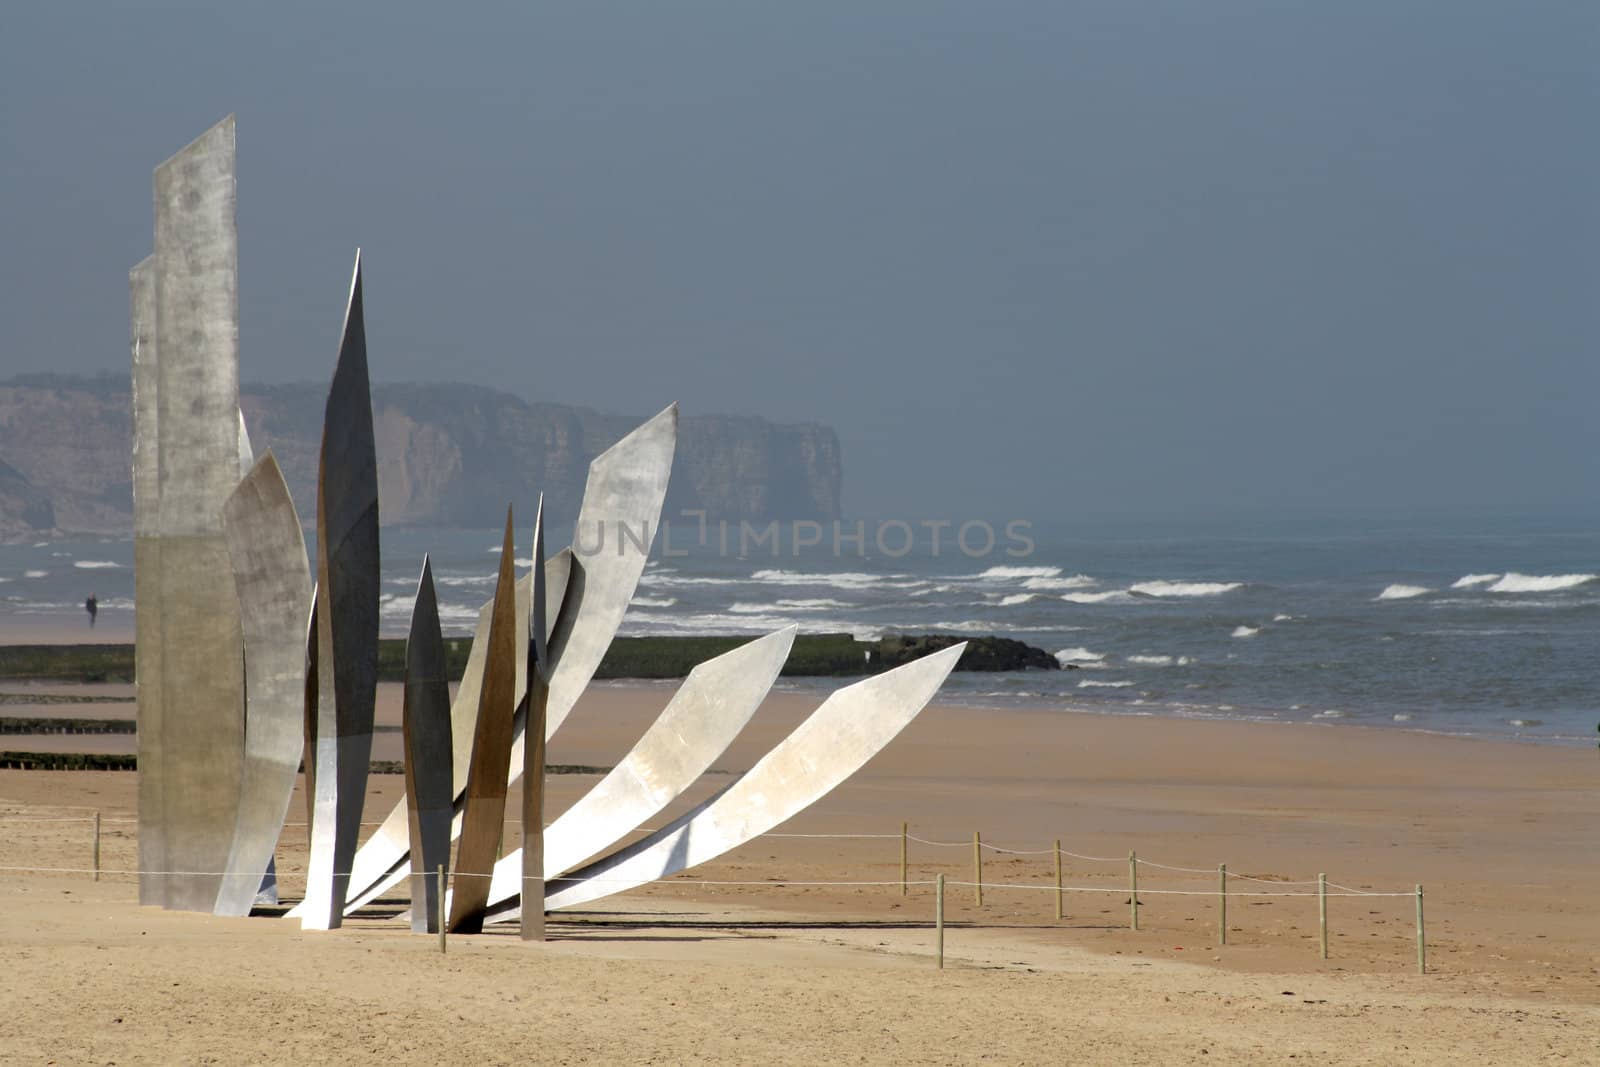 Les Braves Memorial at Omaha Beach near Saint-Laurent-sur-mer, Normandy, France.